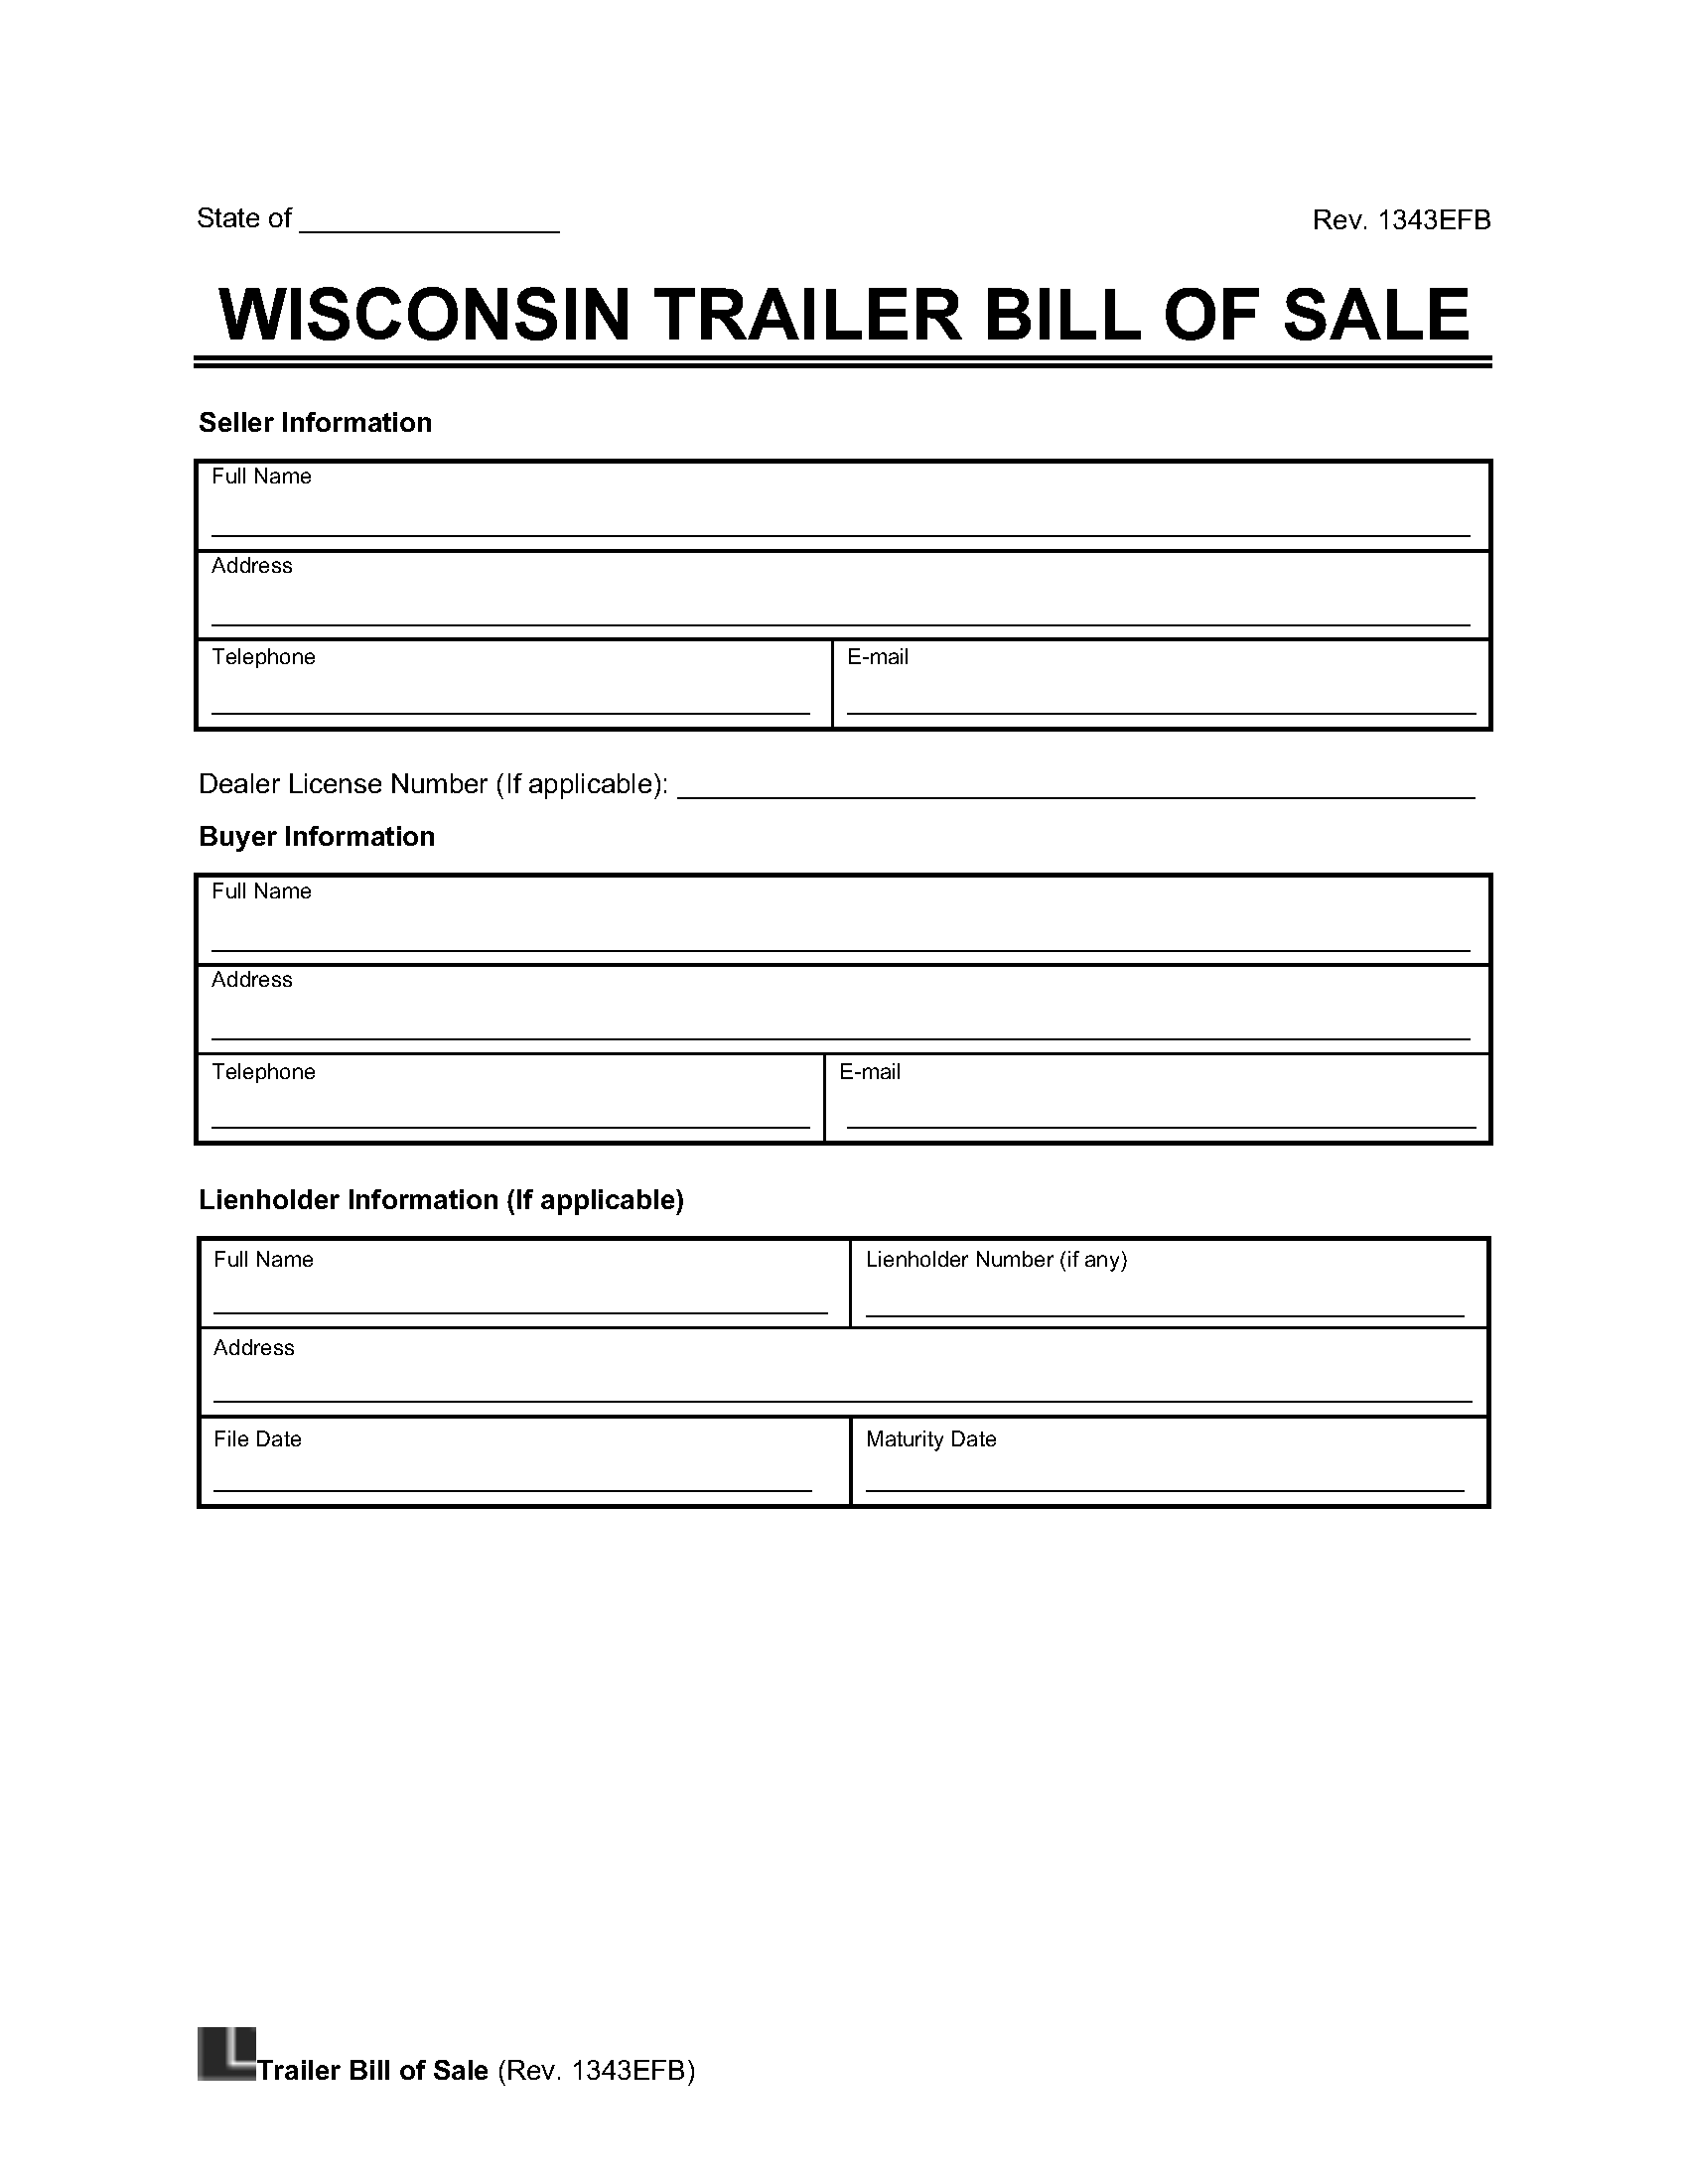 Wisconsin Trailer Bill of Sale screenshot